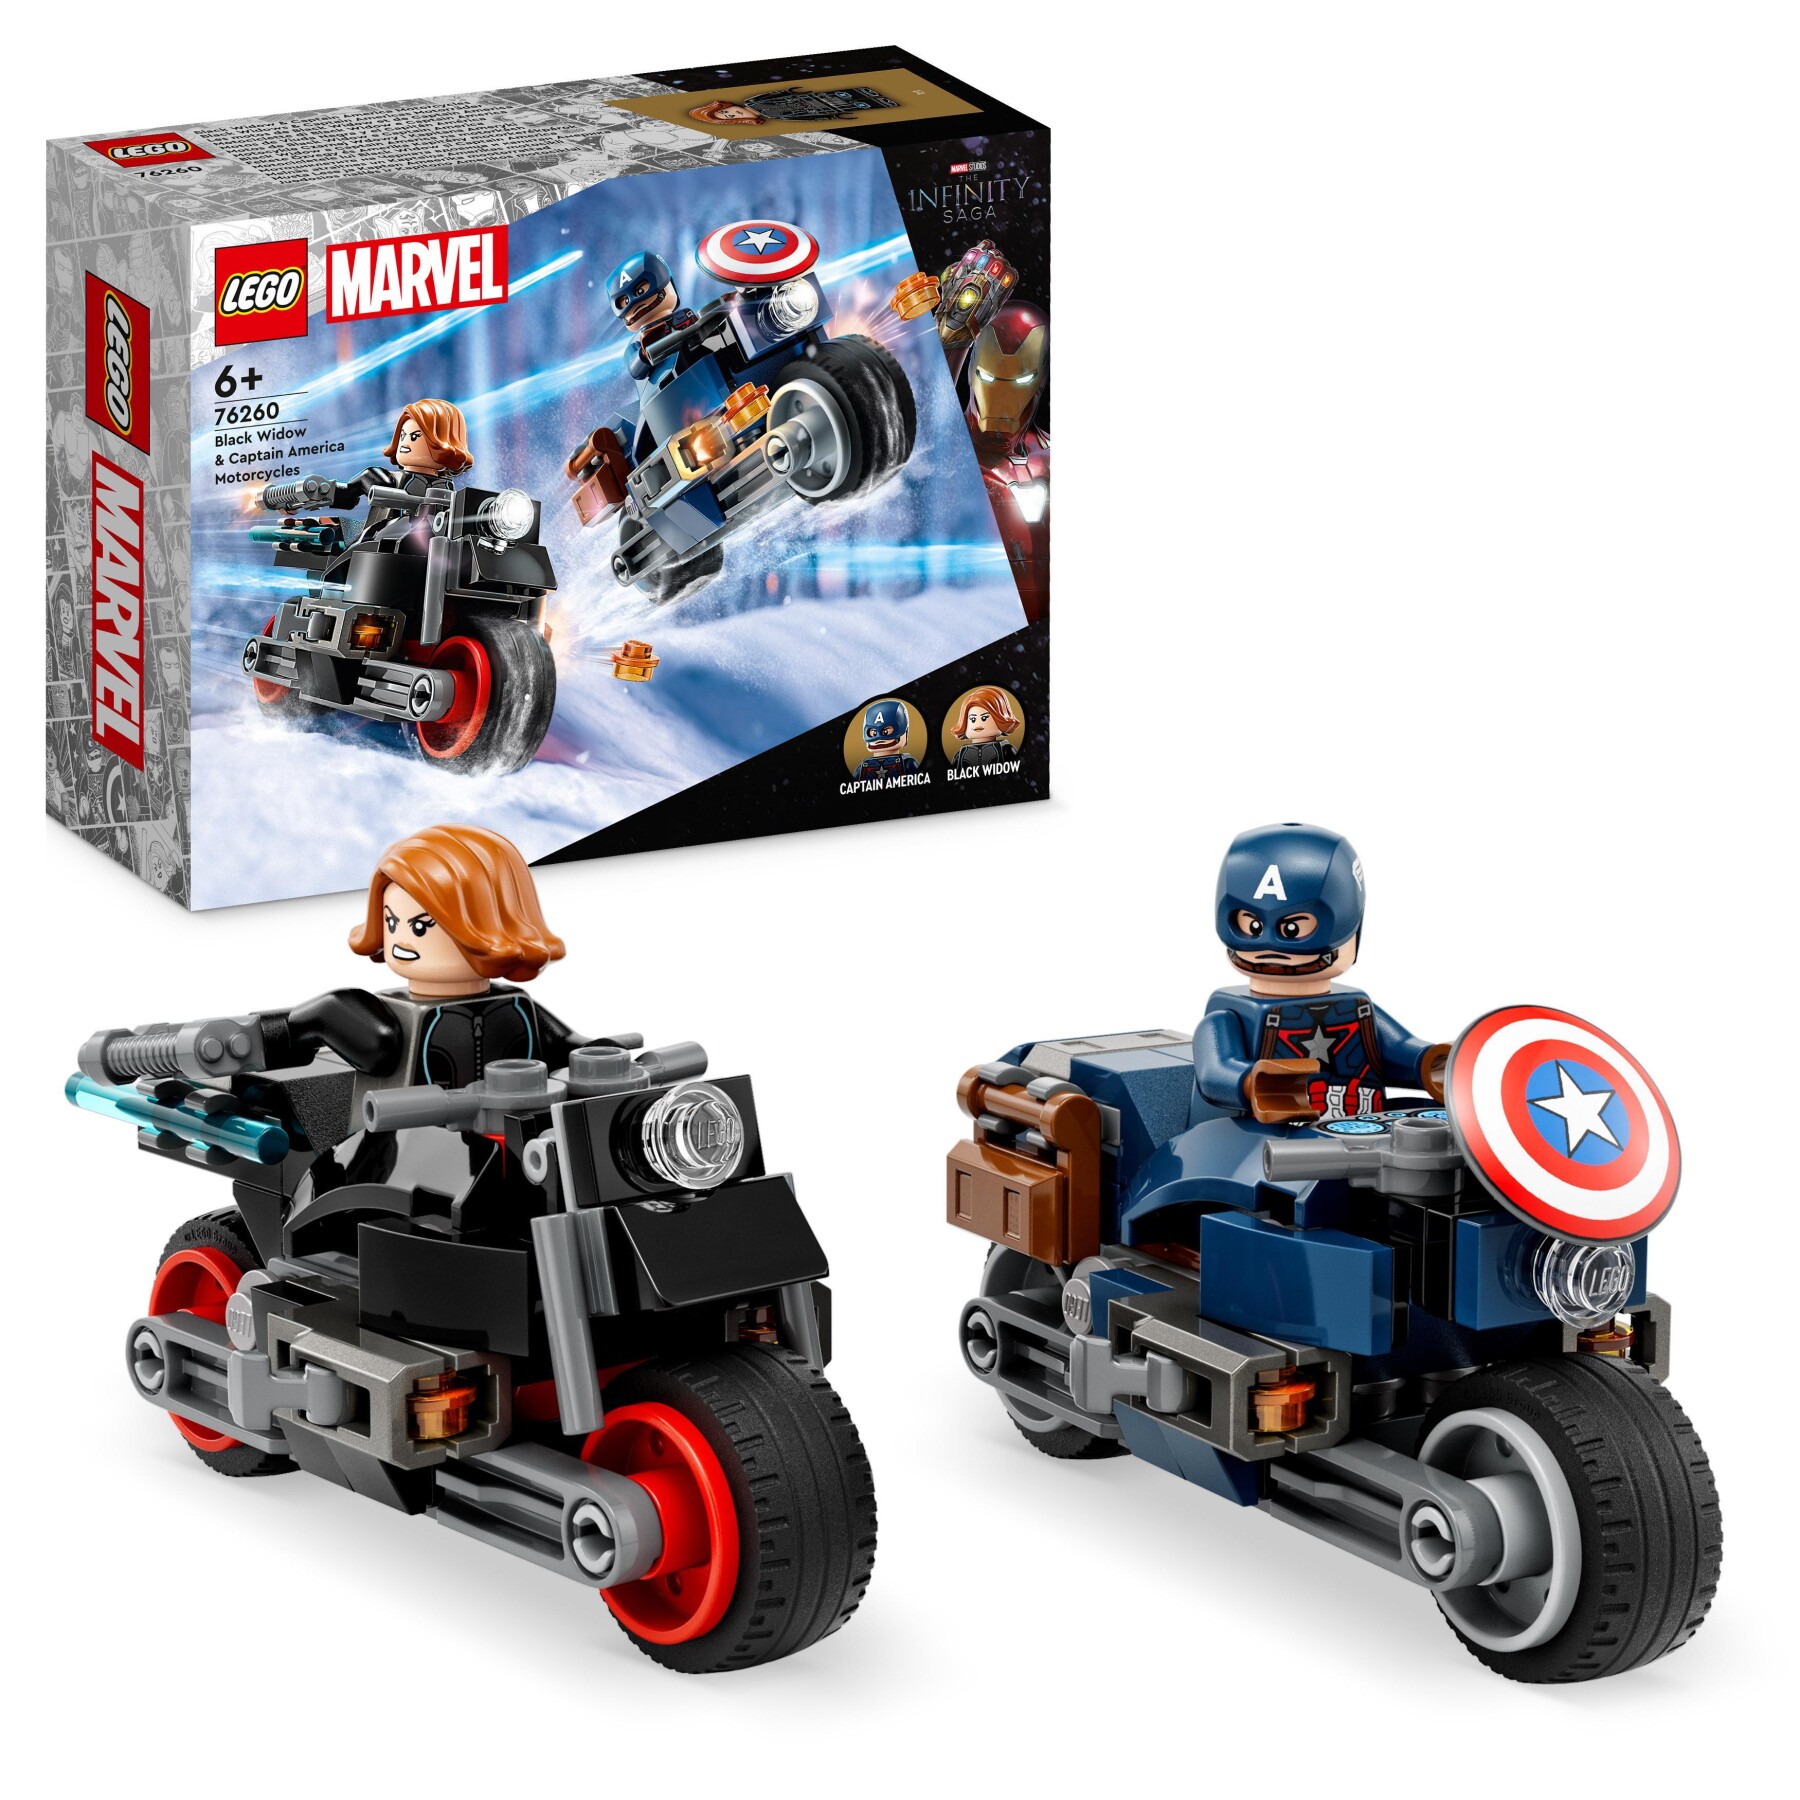 Lego marvel 76260 motociclette di black widow e captain america, set avengers age of ultron con 2 supereroi e moto giocattolo - LEGO SUPER HEROES, Avengers